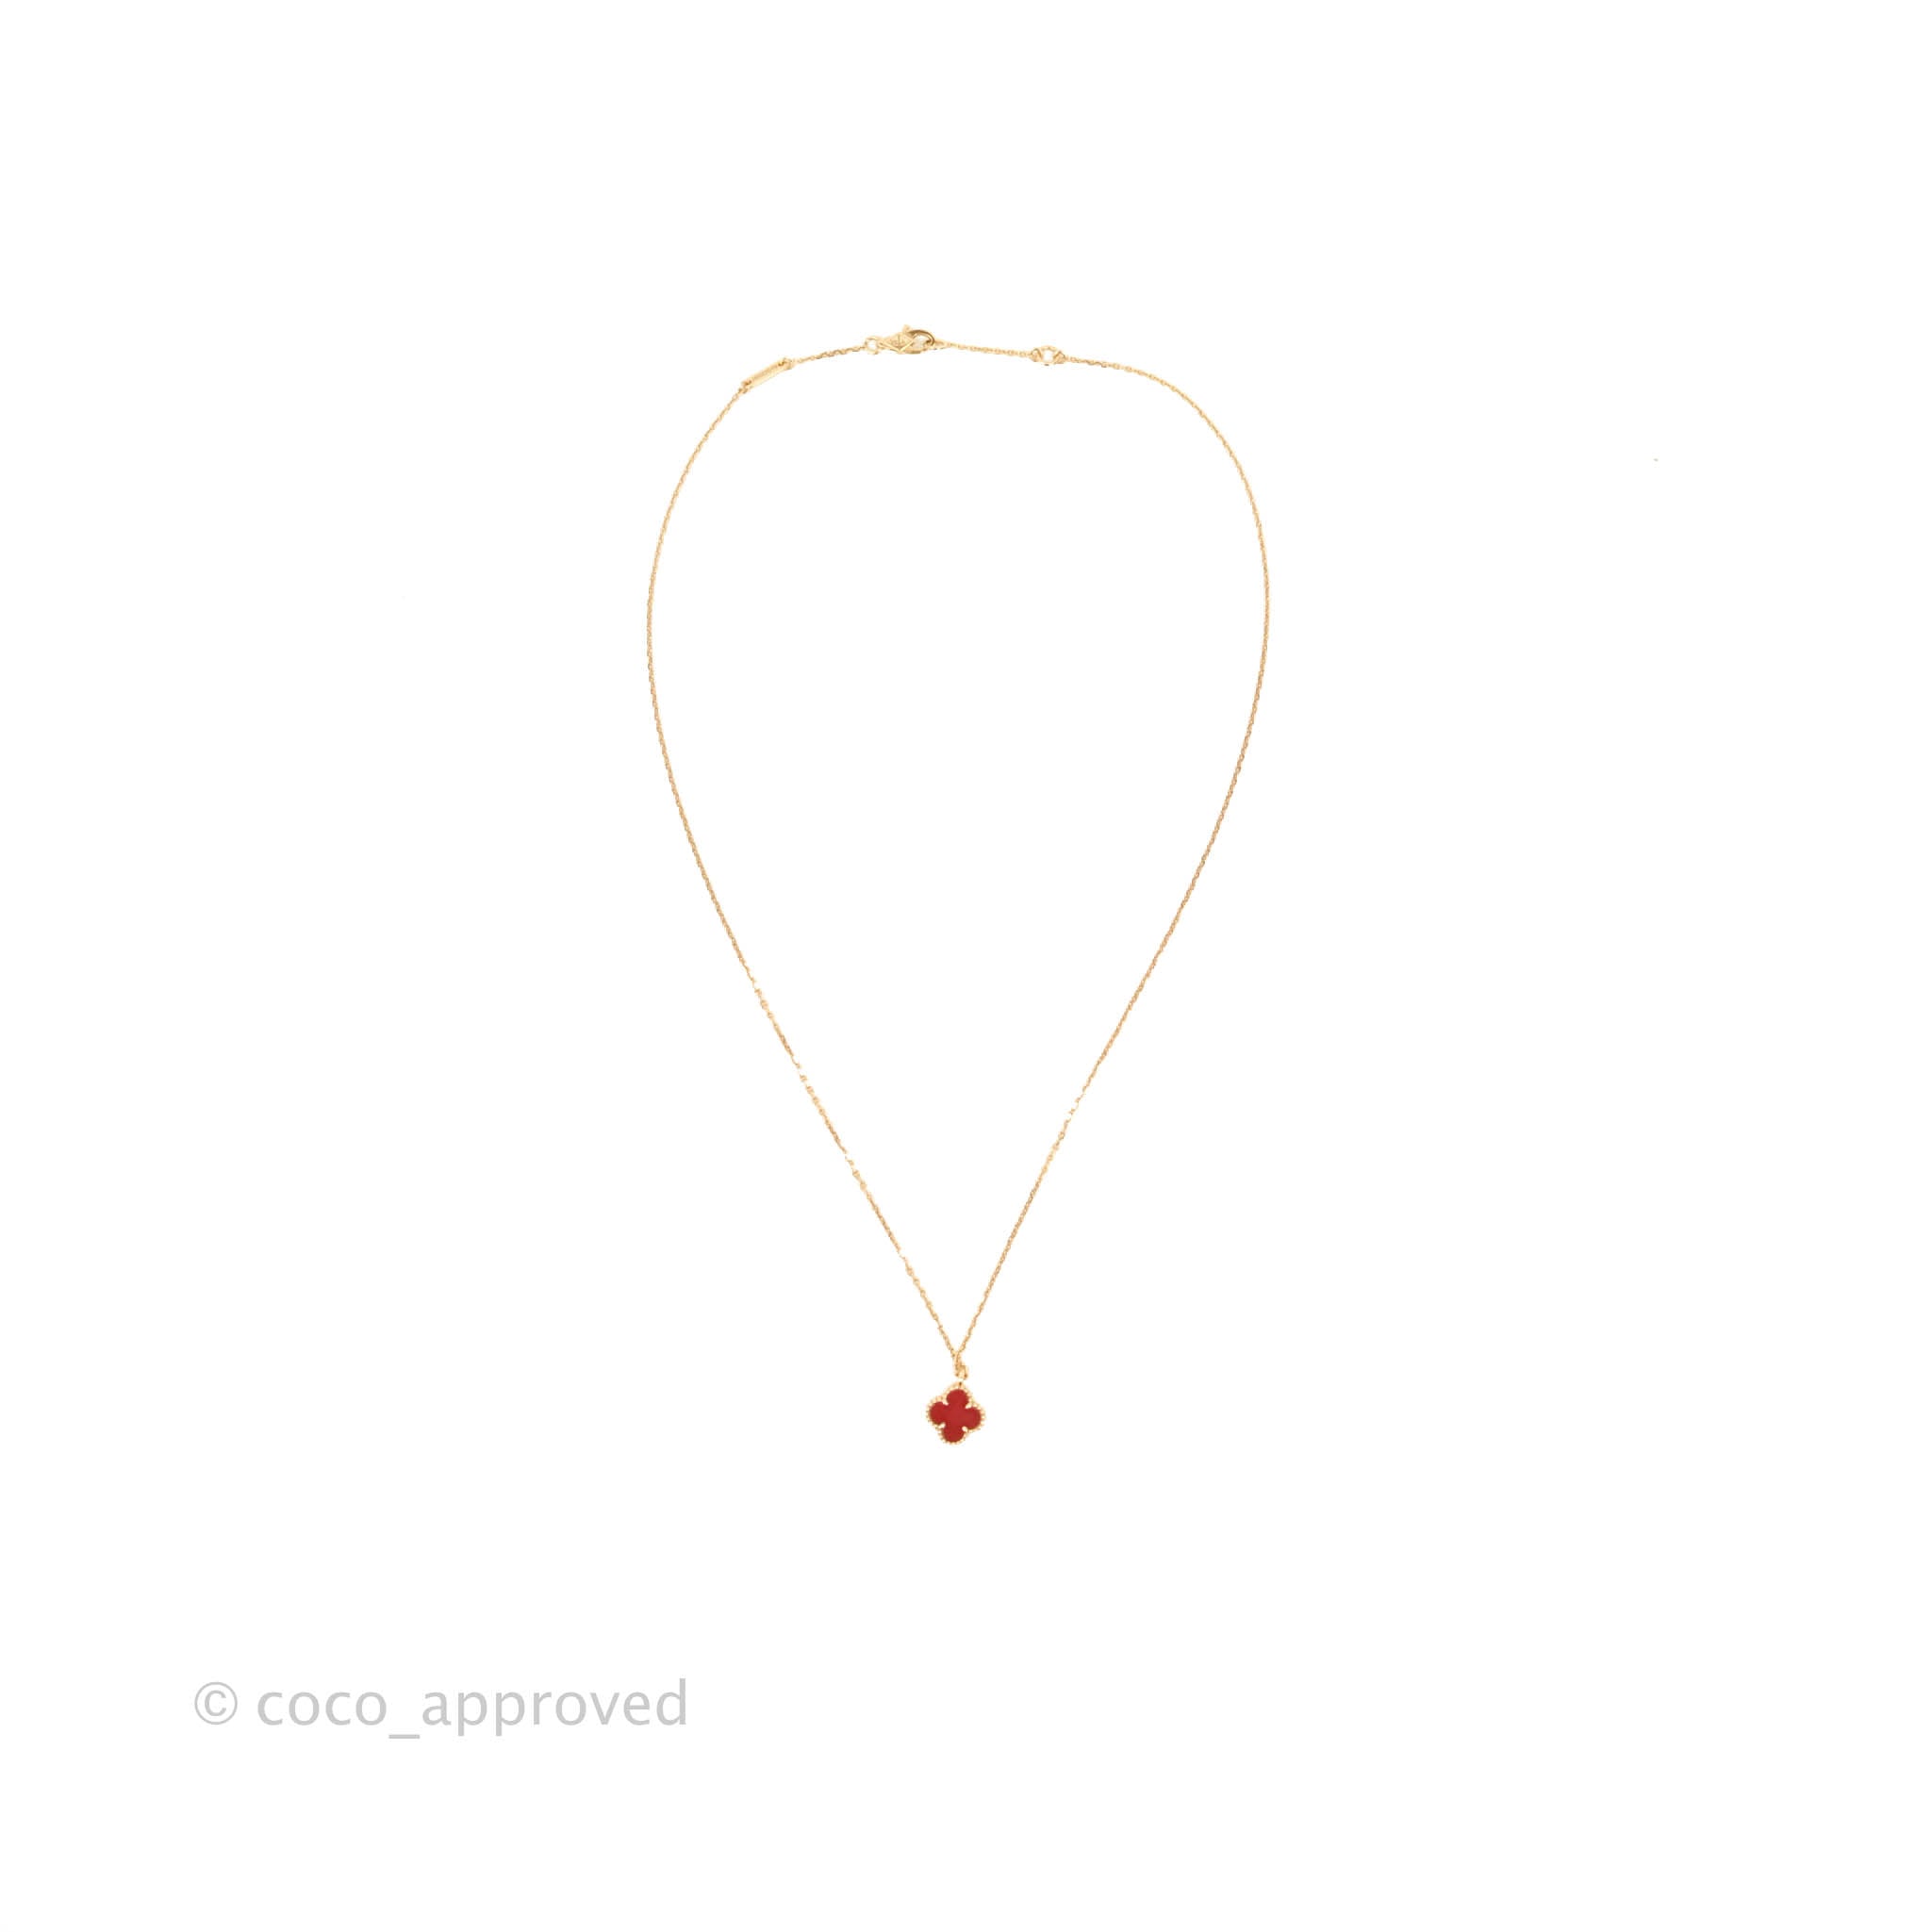 Van Cleef & Arpels Sweet Alhambra Clover Red Carnelian Rose Gold Pendant  Necklace Van Cleef & Arpels